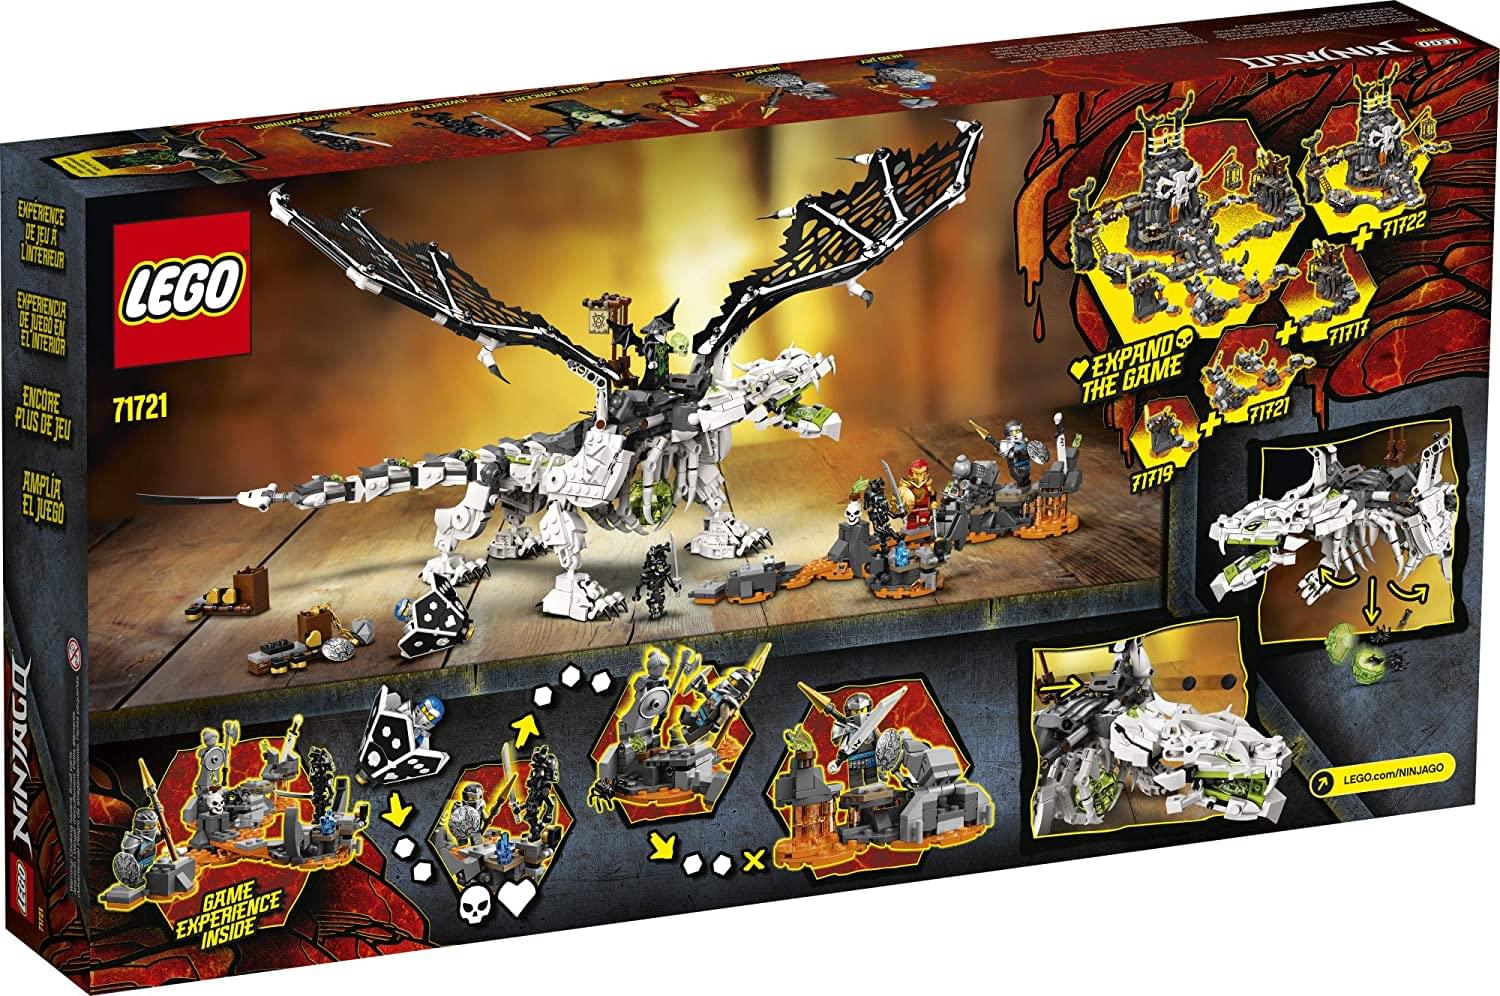 LEGO Ninjago 71721 Skull Sorcerers Dragon 1016 Piece Building Set